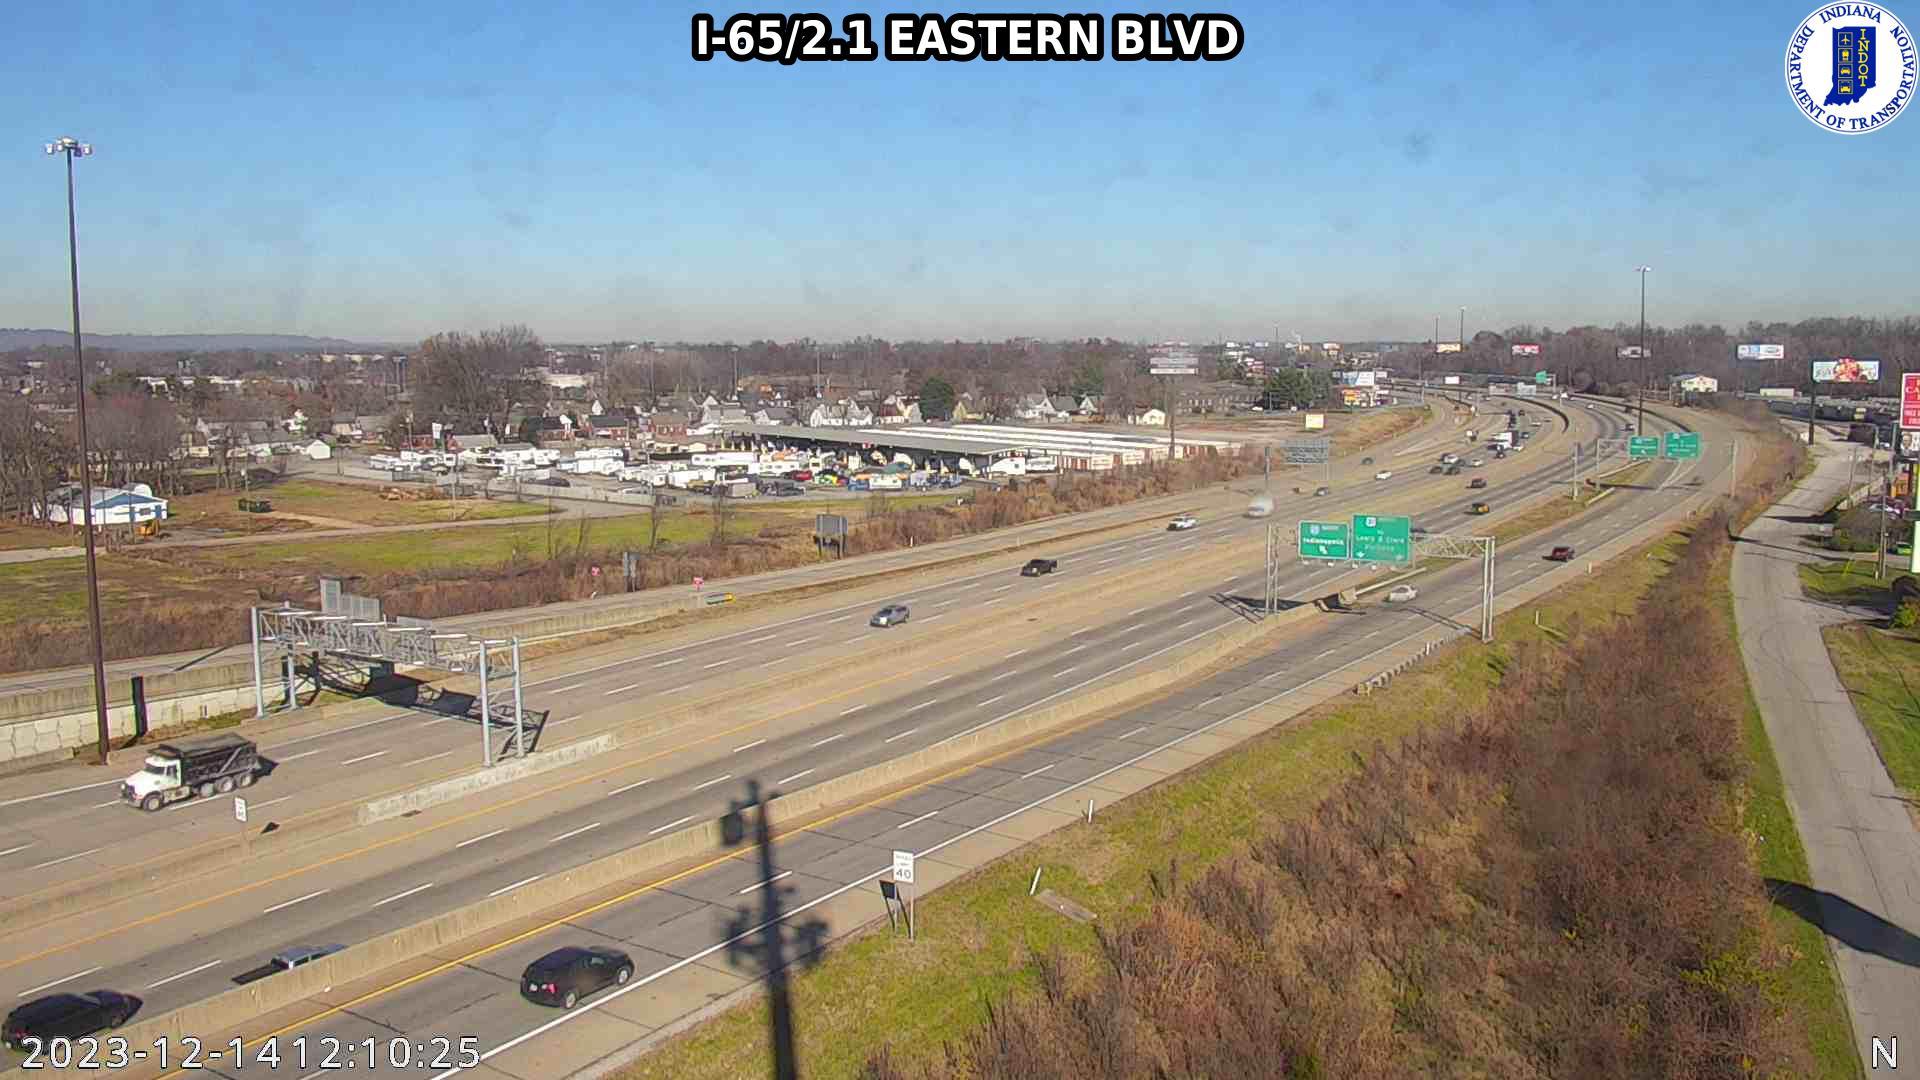 Traffic Cam Jeffersonville: I-65: I-65/2.1 EASTERN BLVD Player